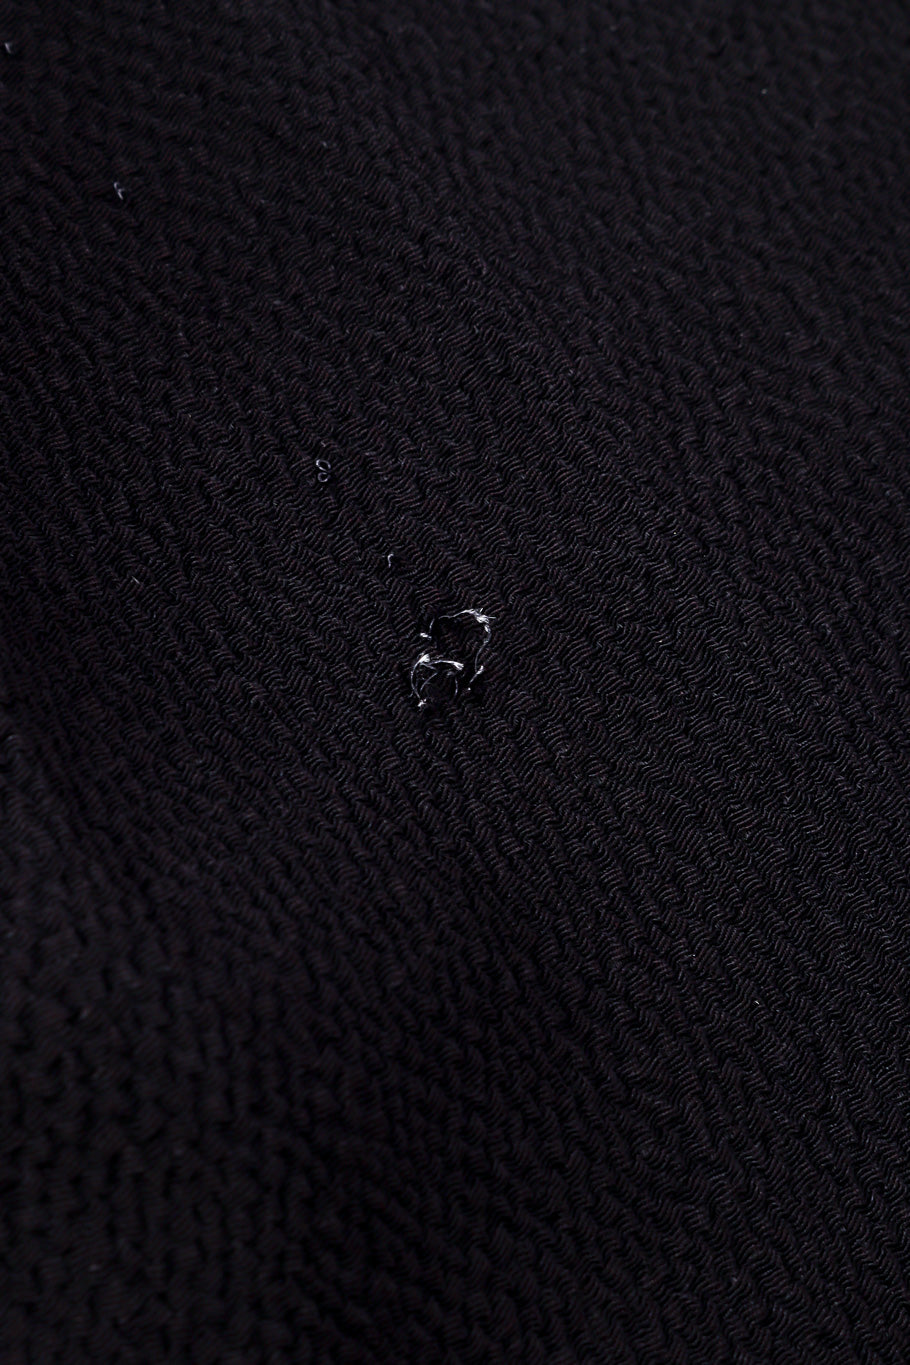 Wrap trouser by Yves Saint Laurent small hole close  @recessla